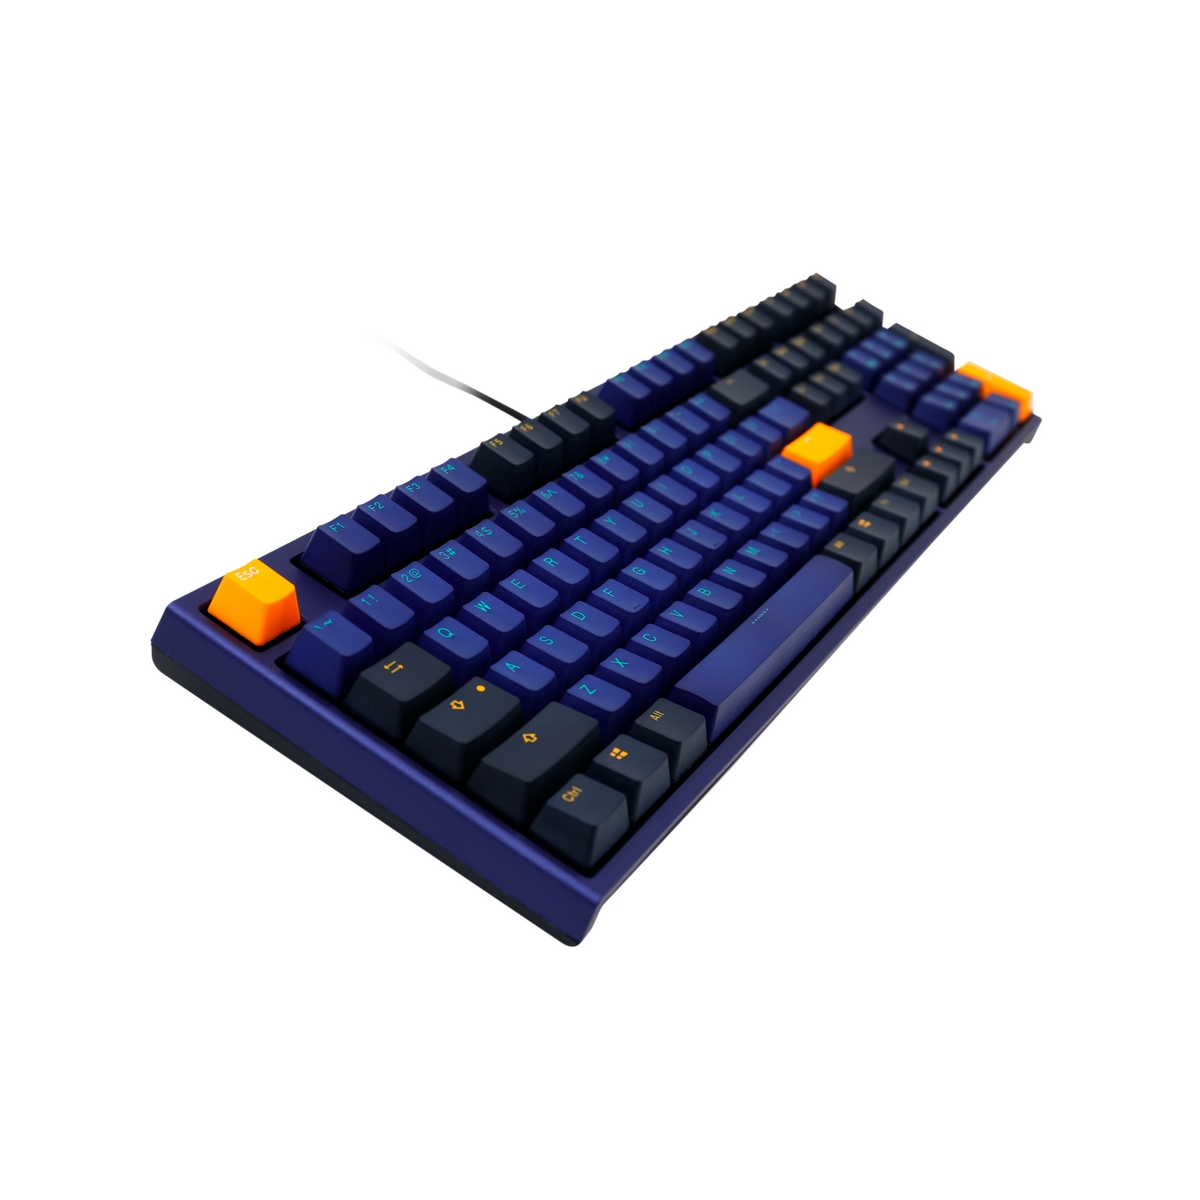 Ducky - Ducky One 2 Horizon Red Cherry MX Switch USB Mechanical Gaming Keyboard UK Layout